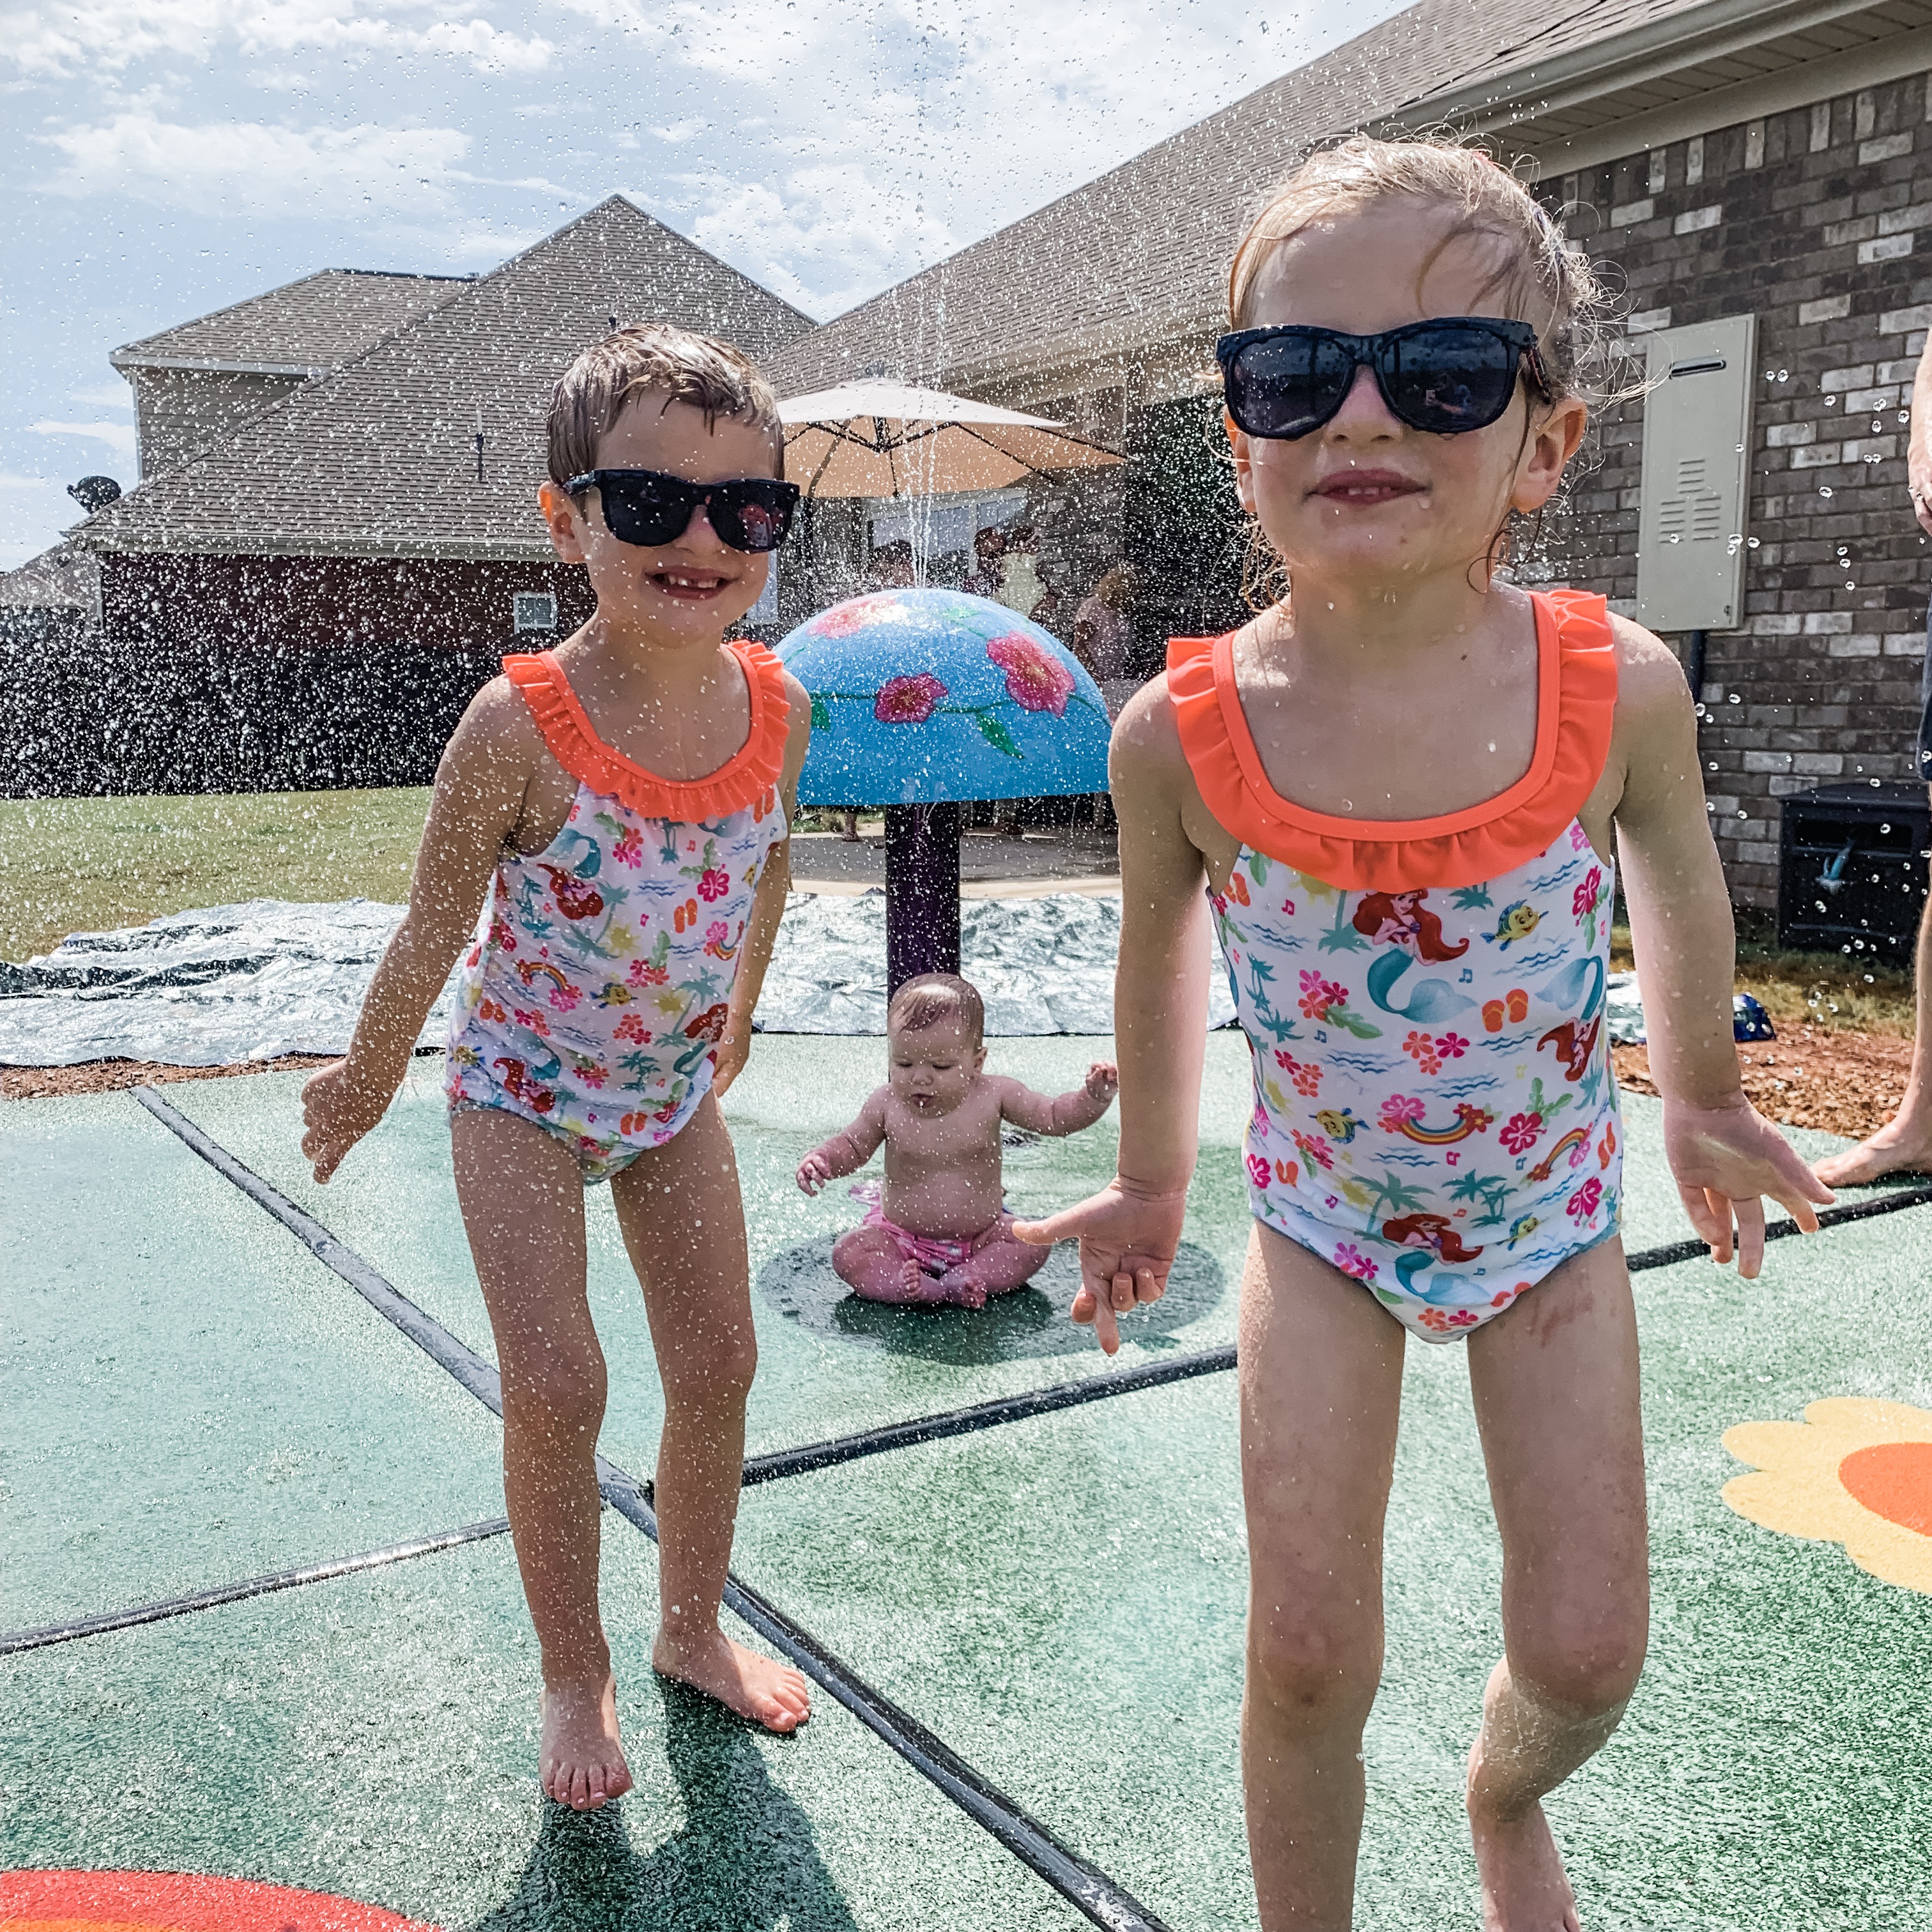 The girls in their backyard splash pad!